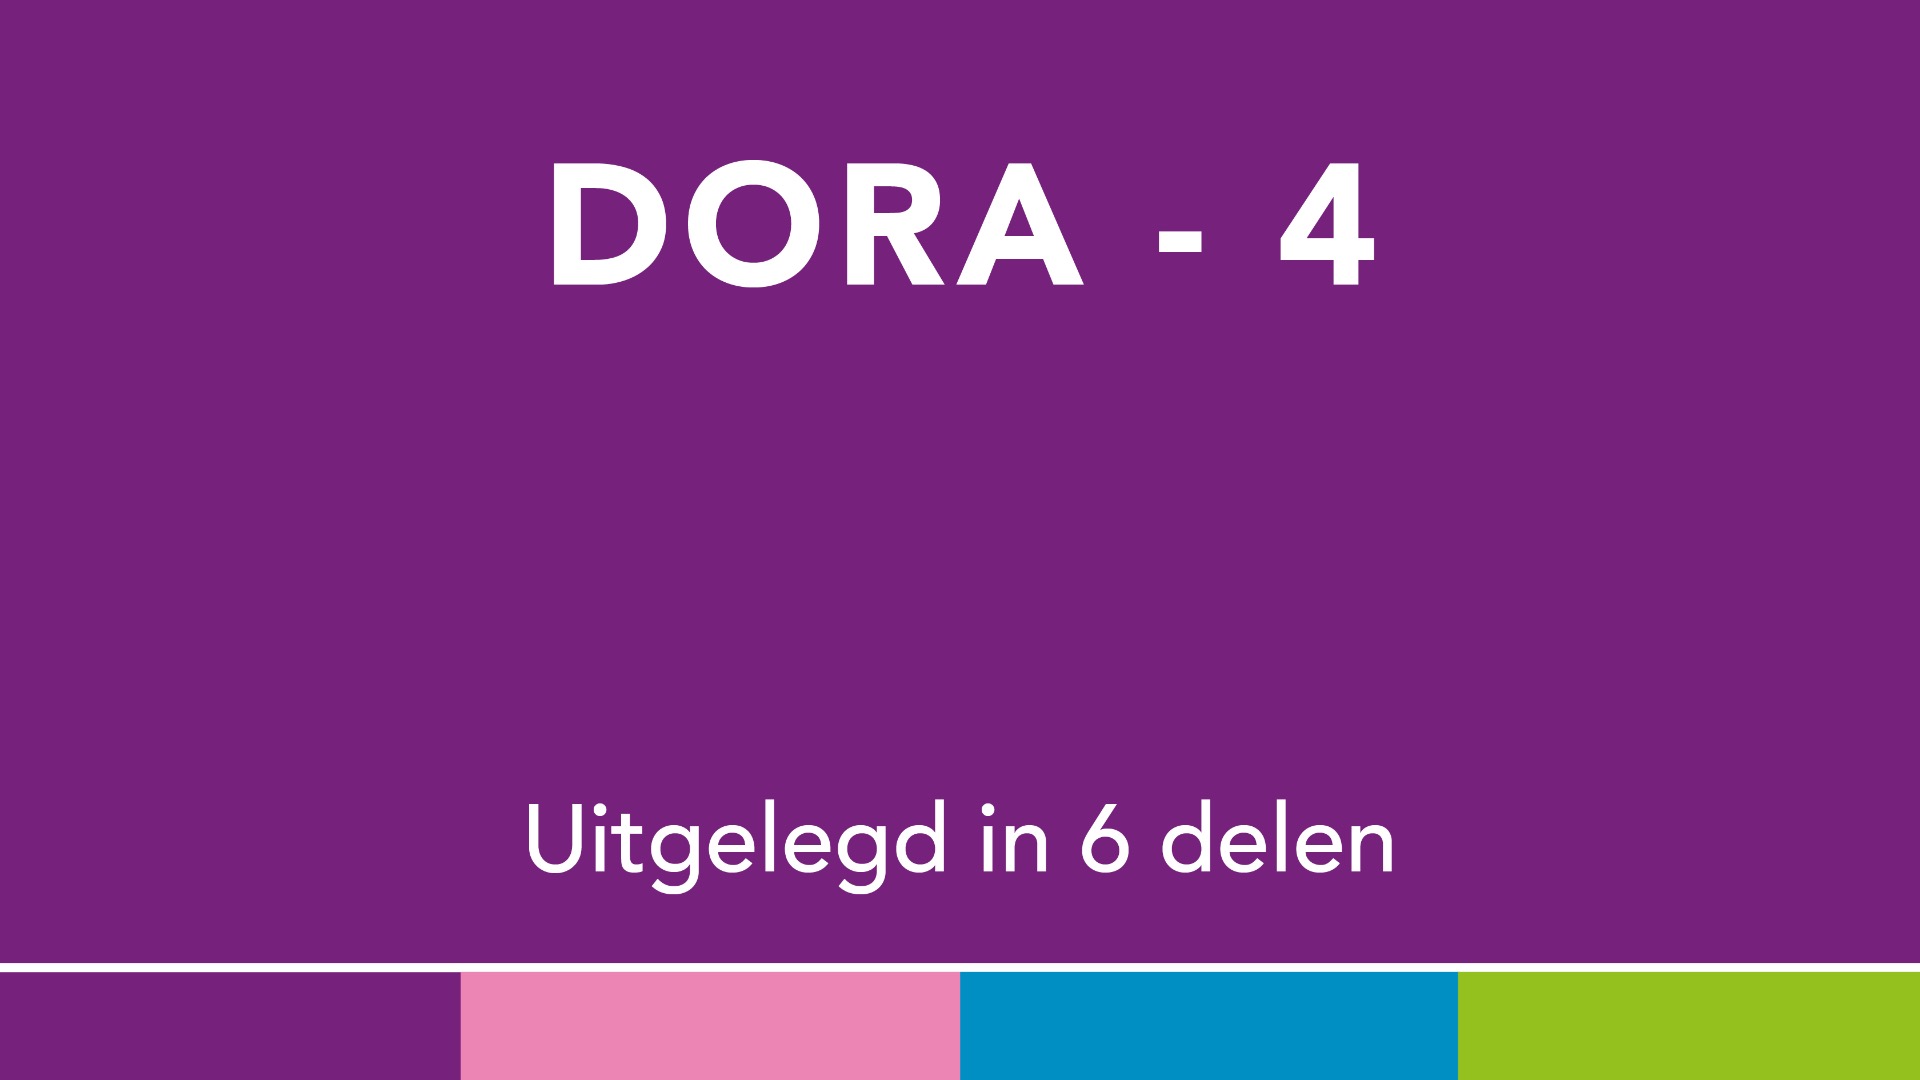 DORA - 4